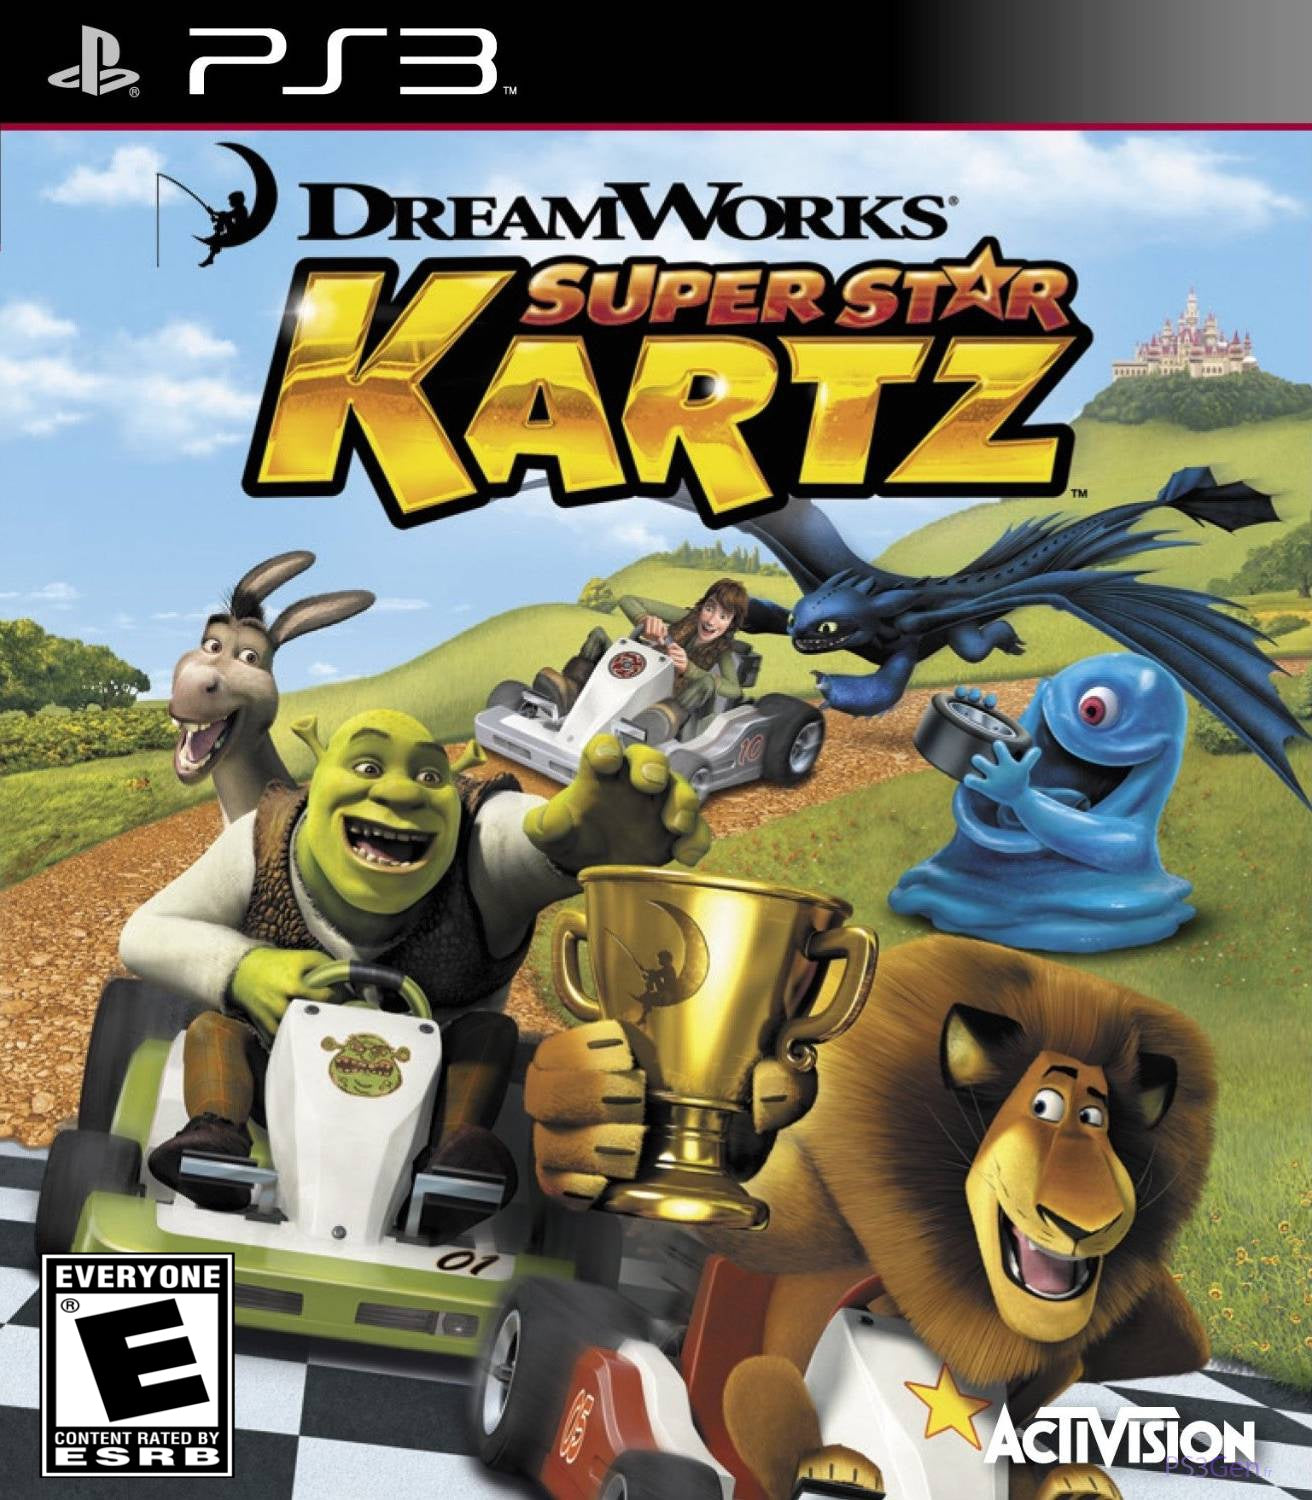 Dreamworks Super Star Kartz - PS3 (Pre-owned)